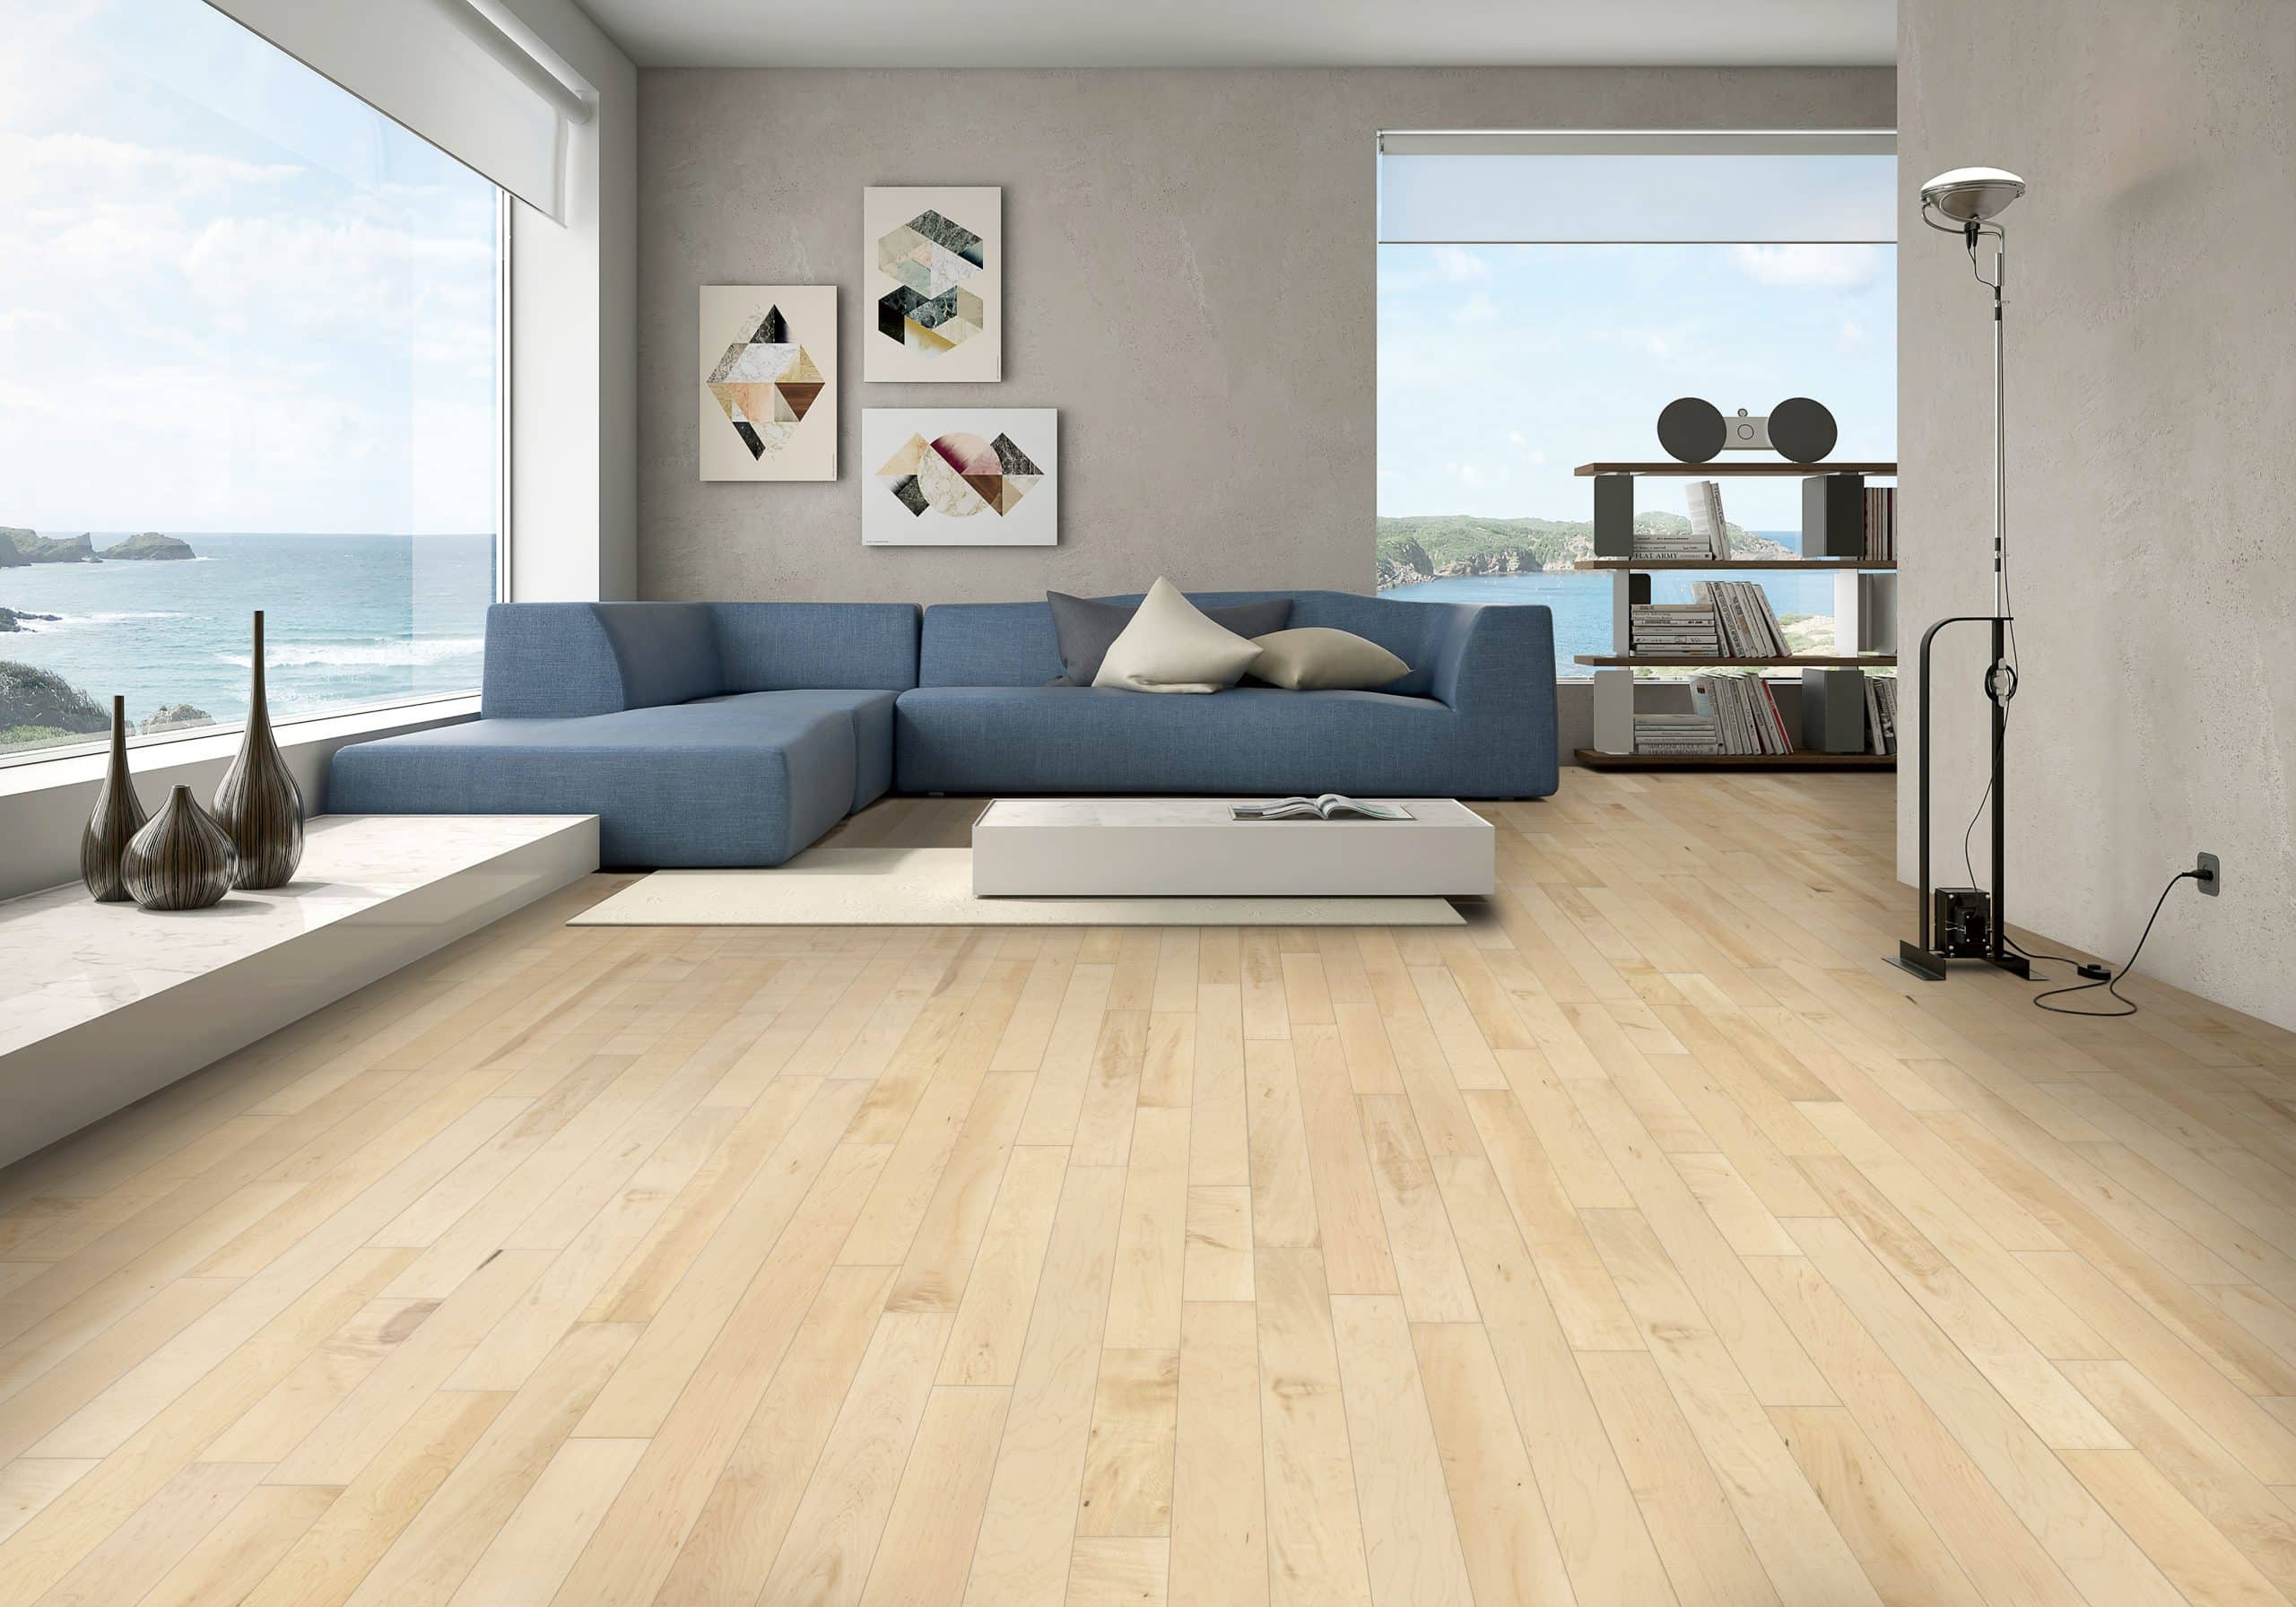 Maple Hardwood Flooring: Beauty & Resilience Combined